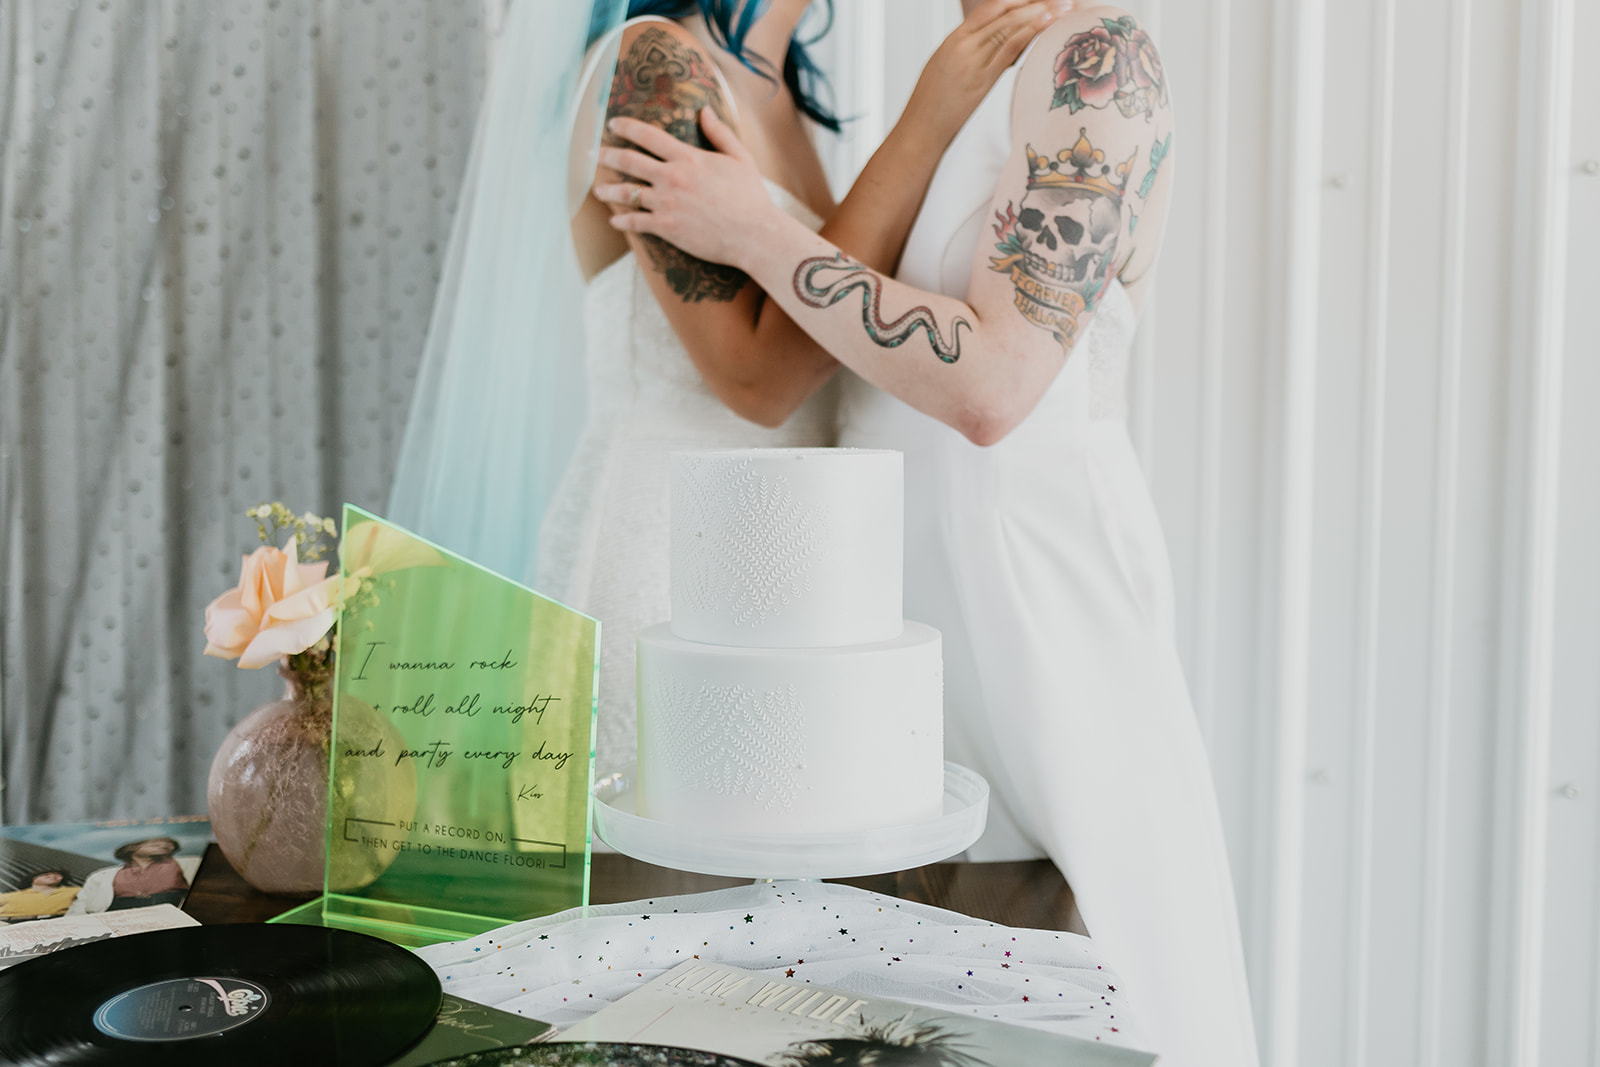 Tattoo brides pose with their wedding cake